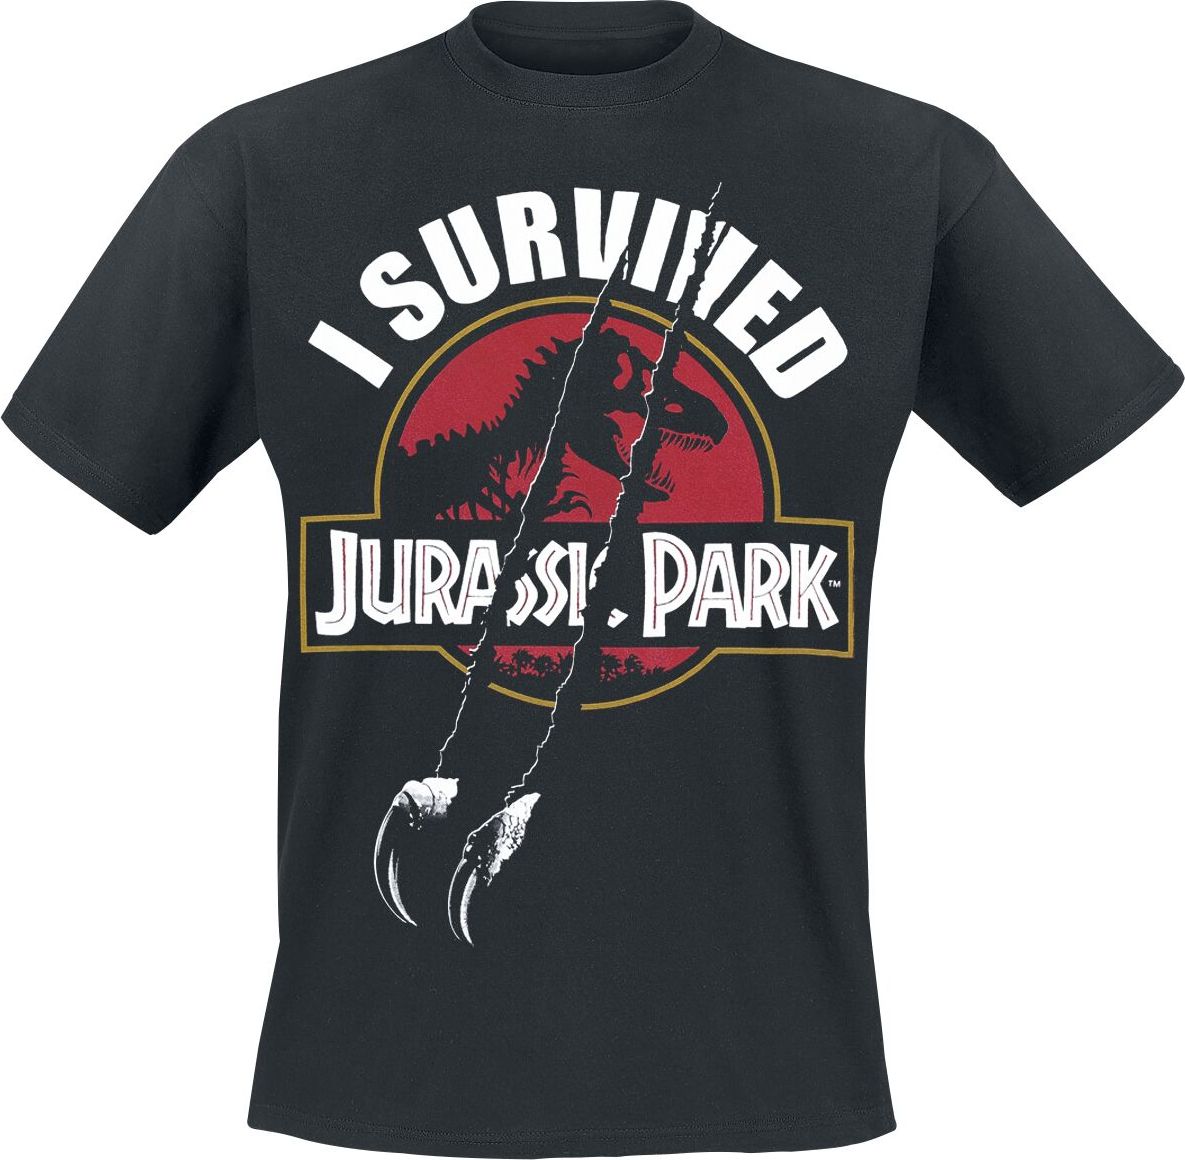 Jurassic Park I Survived! tricko černá